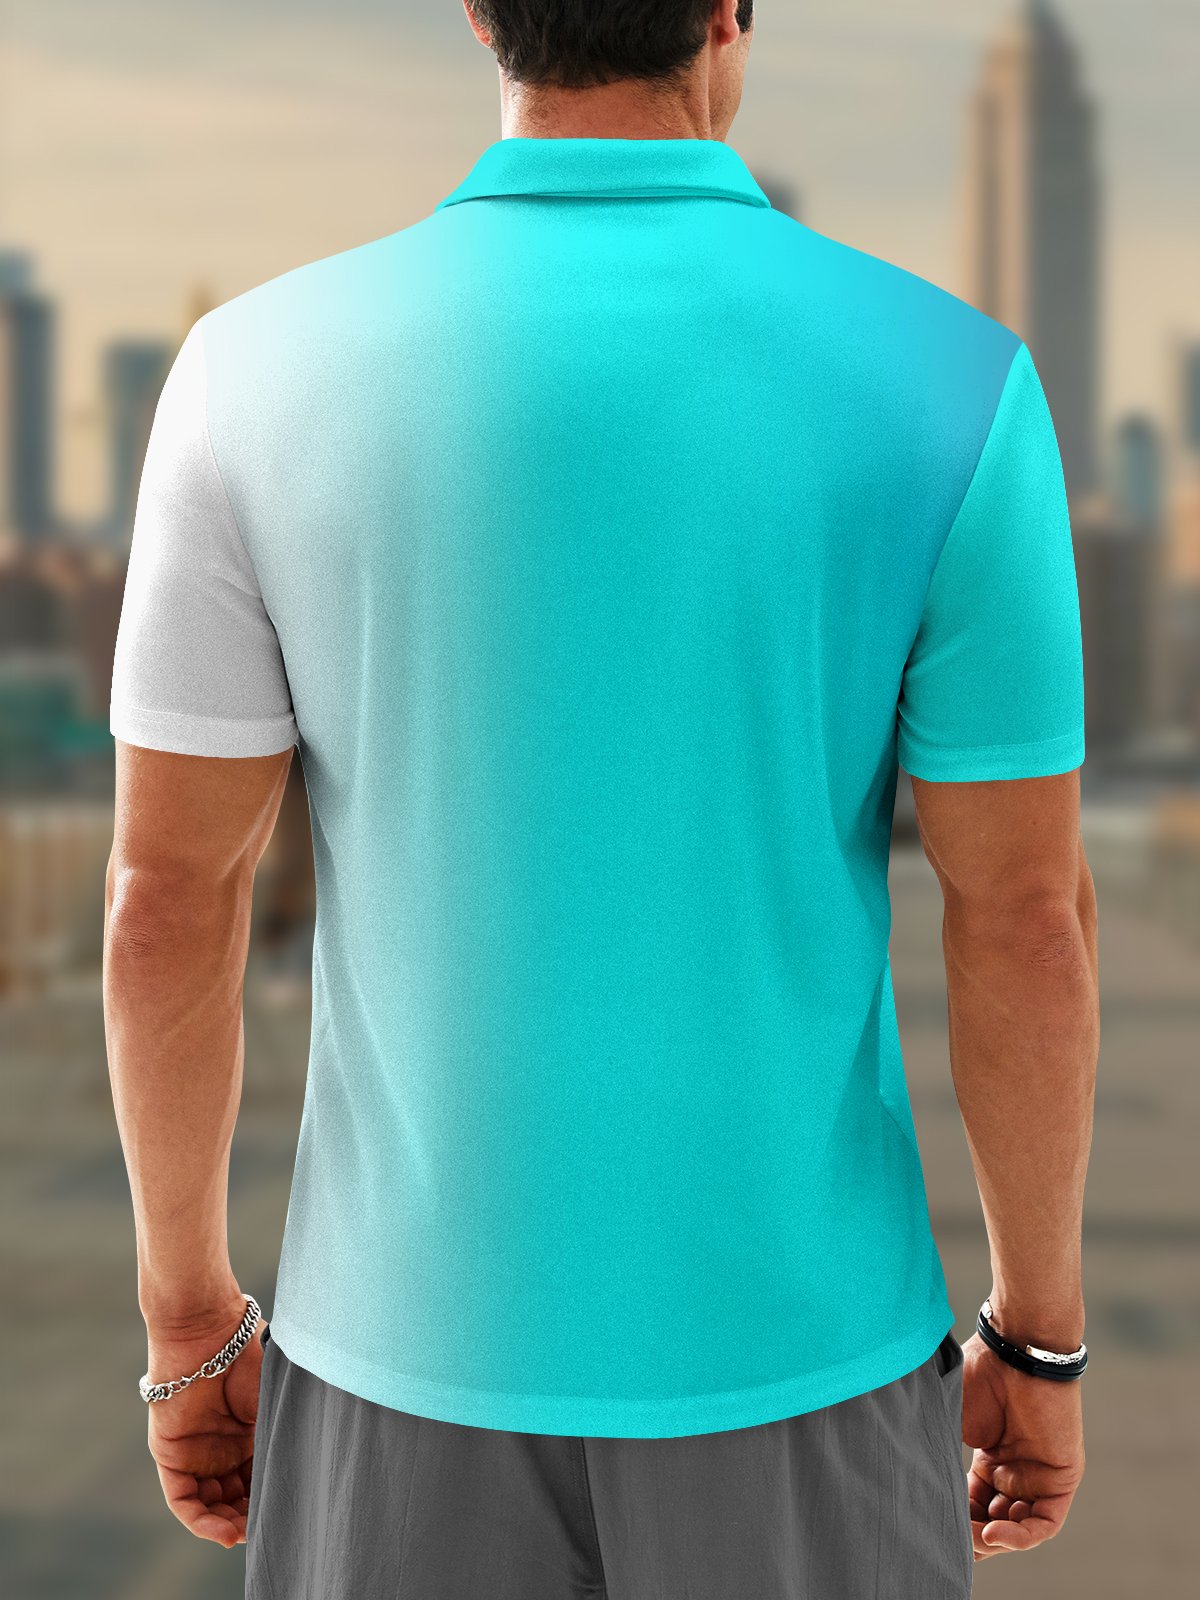 Hardaddy Golf Polo Sports Blue Shirts Short Sleeve Regular Fit Moisture-wicking Cactus Shirts